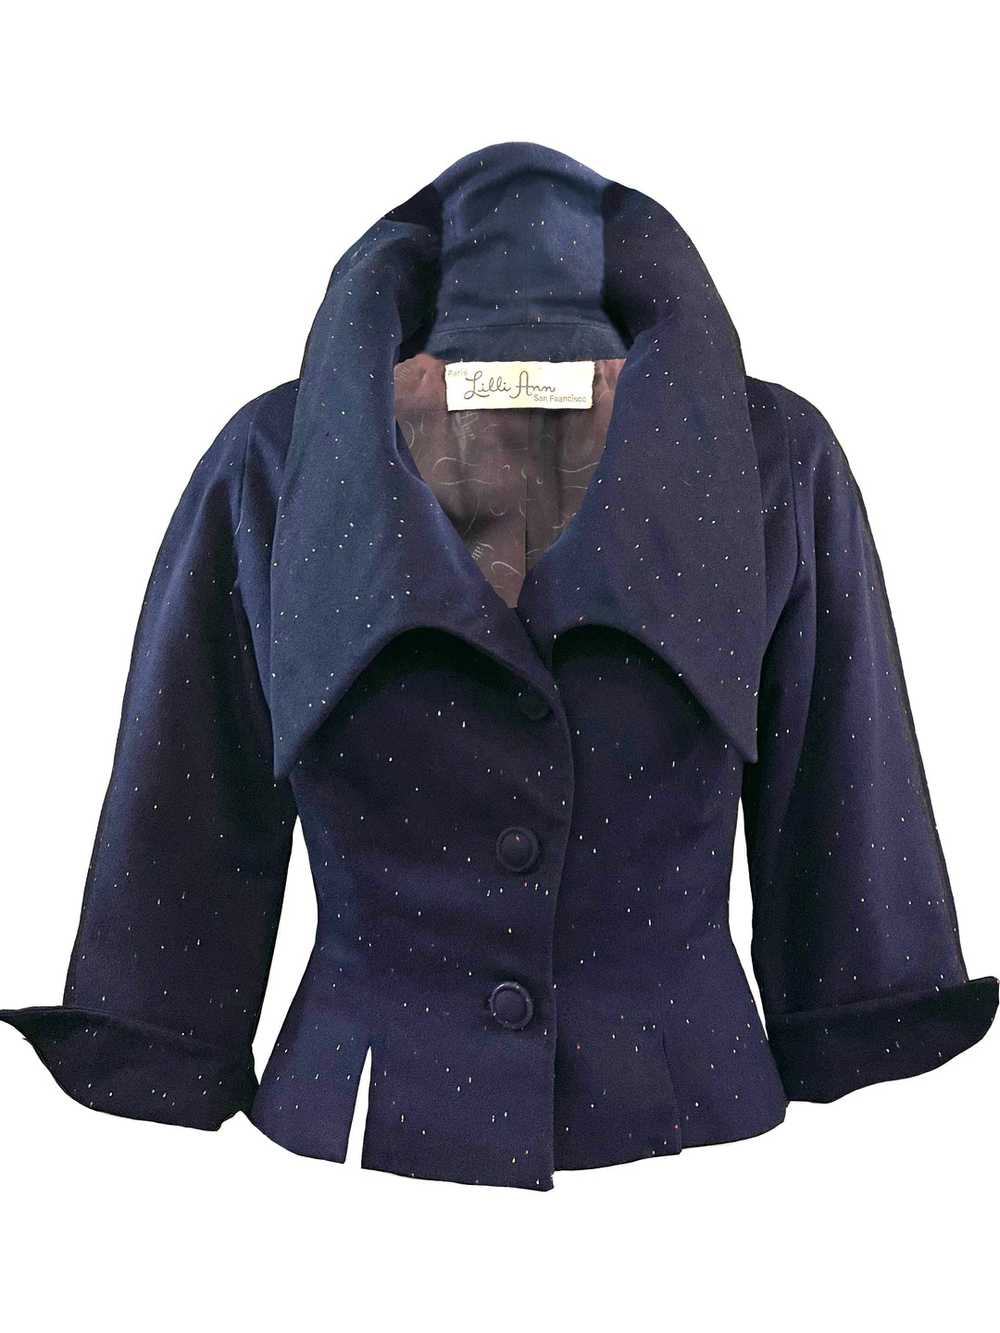 Lilli Ann 50s Blue Wool Rainbow Speckled Jacket - image 1